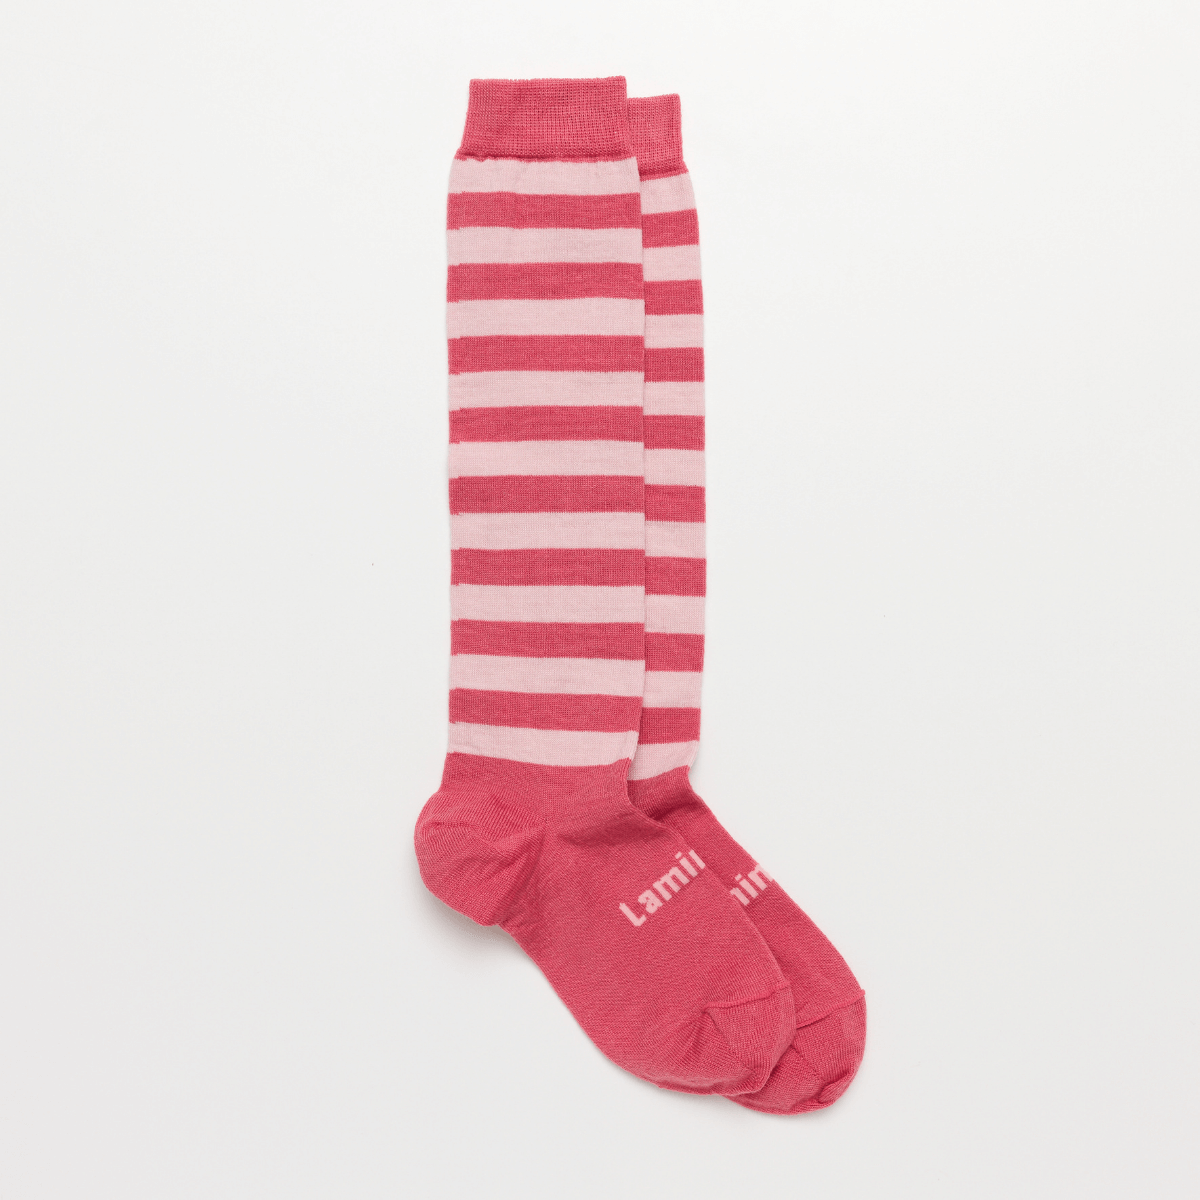 merino wool socks child knee-high pink nz aus